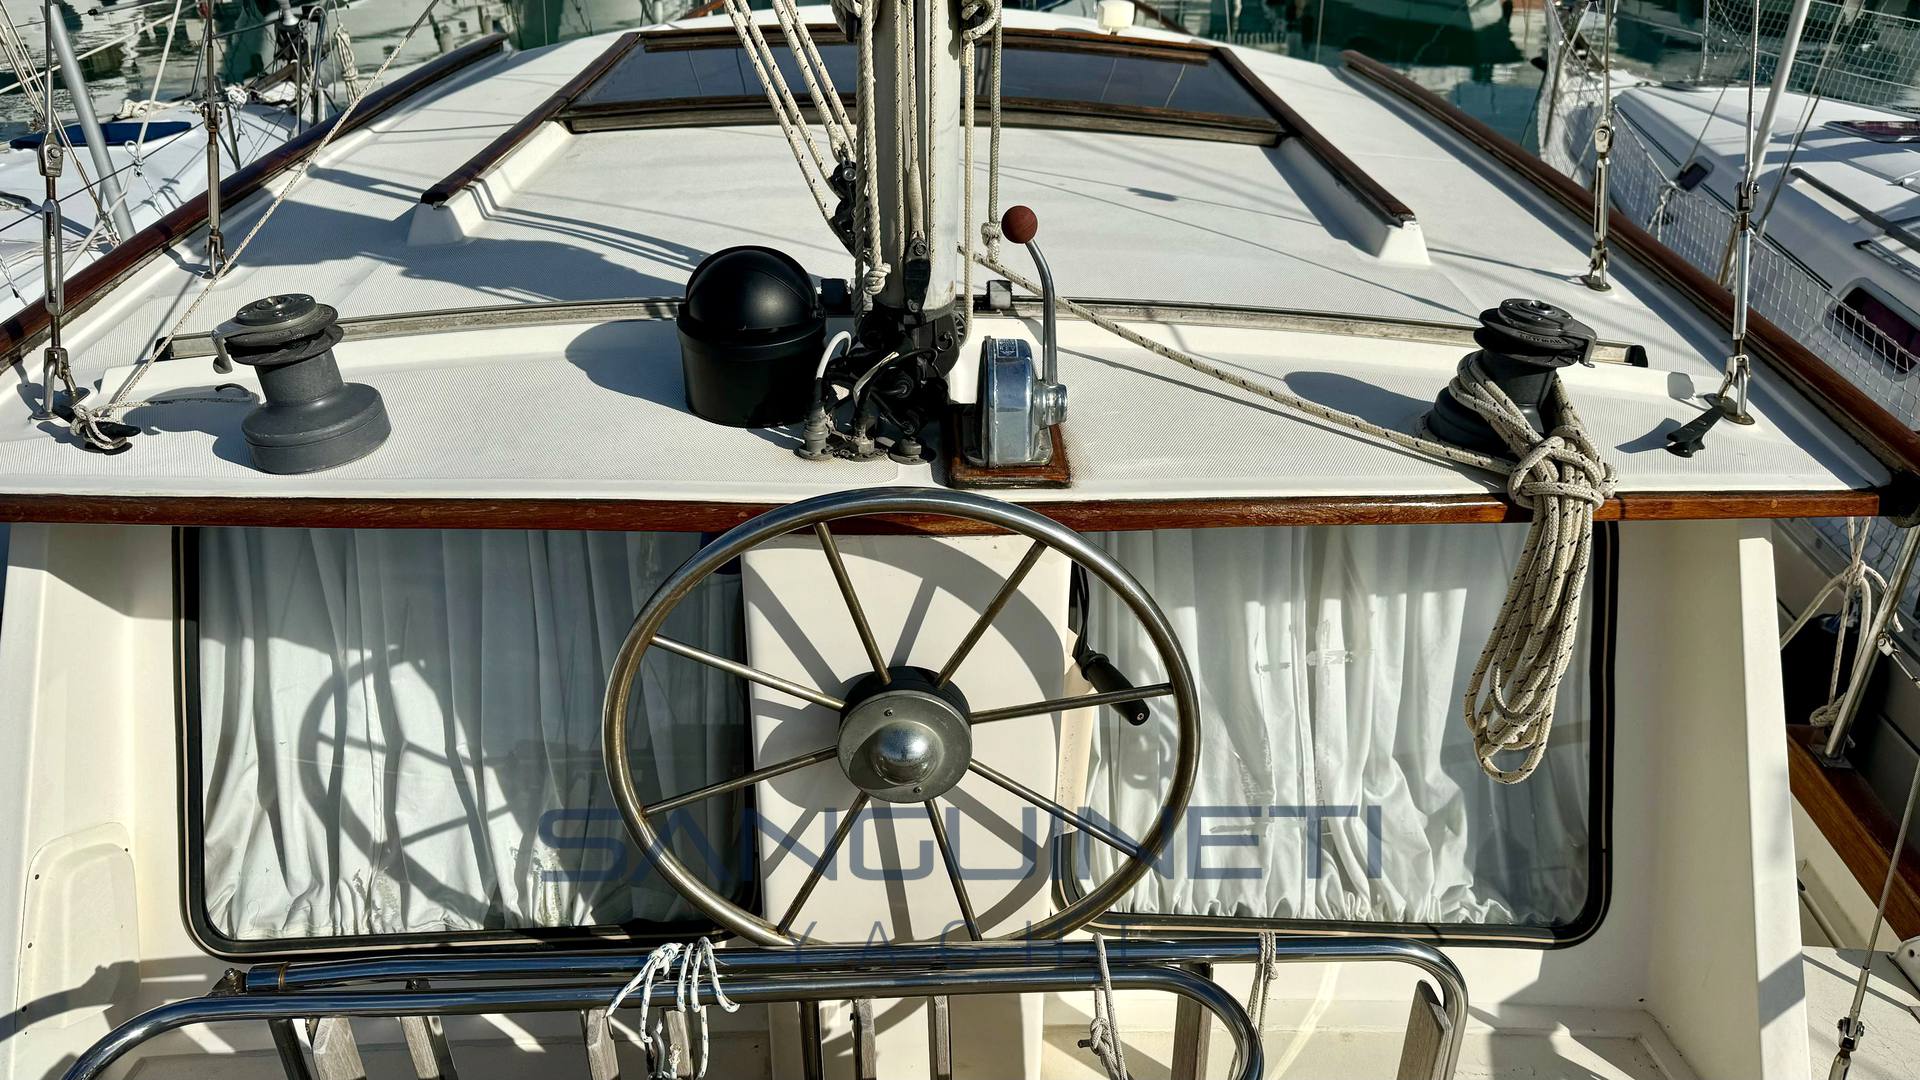 Syltala Nauticat 33 motor boat